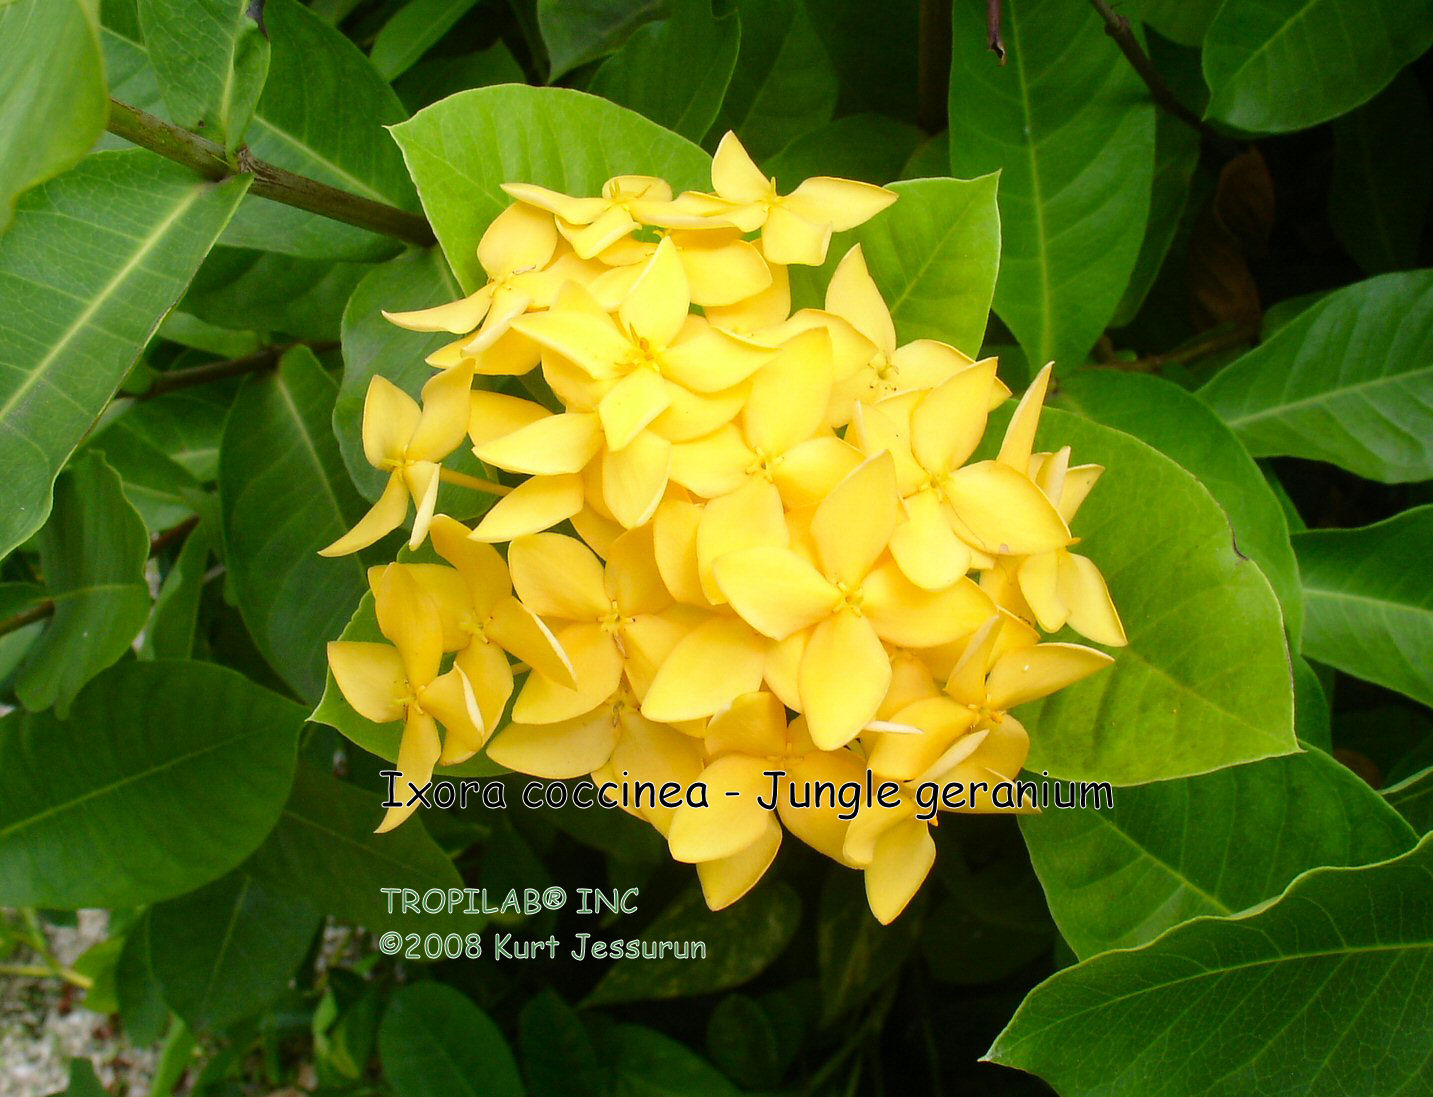 Ixora coccinea - Jungle geranium yellow